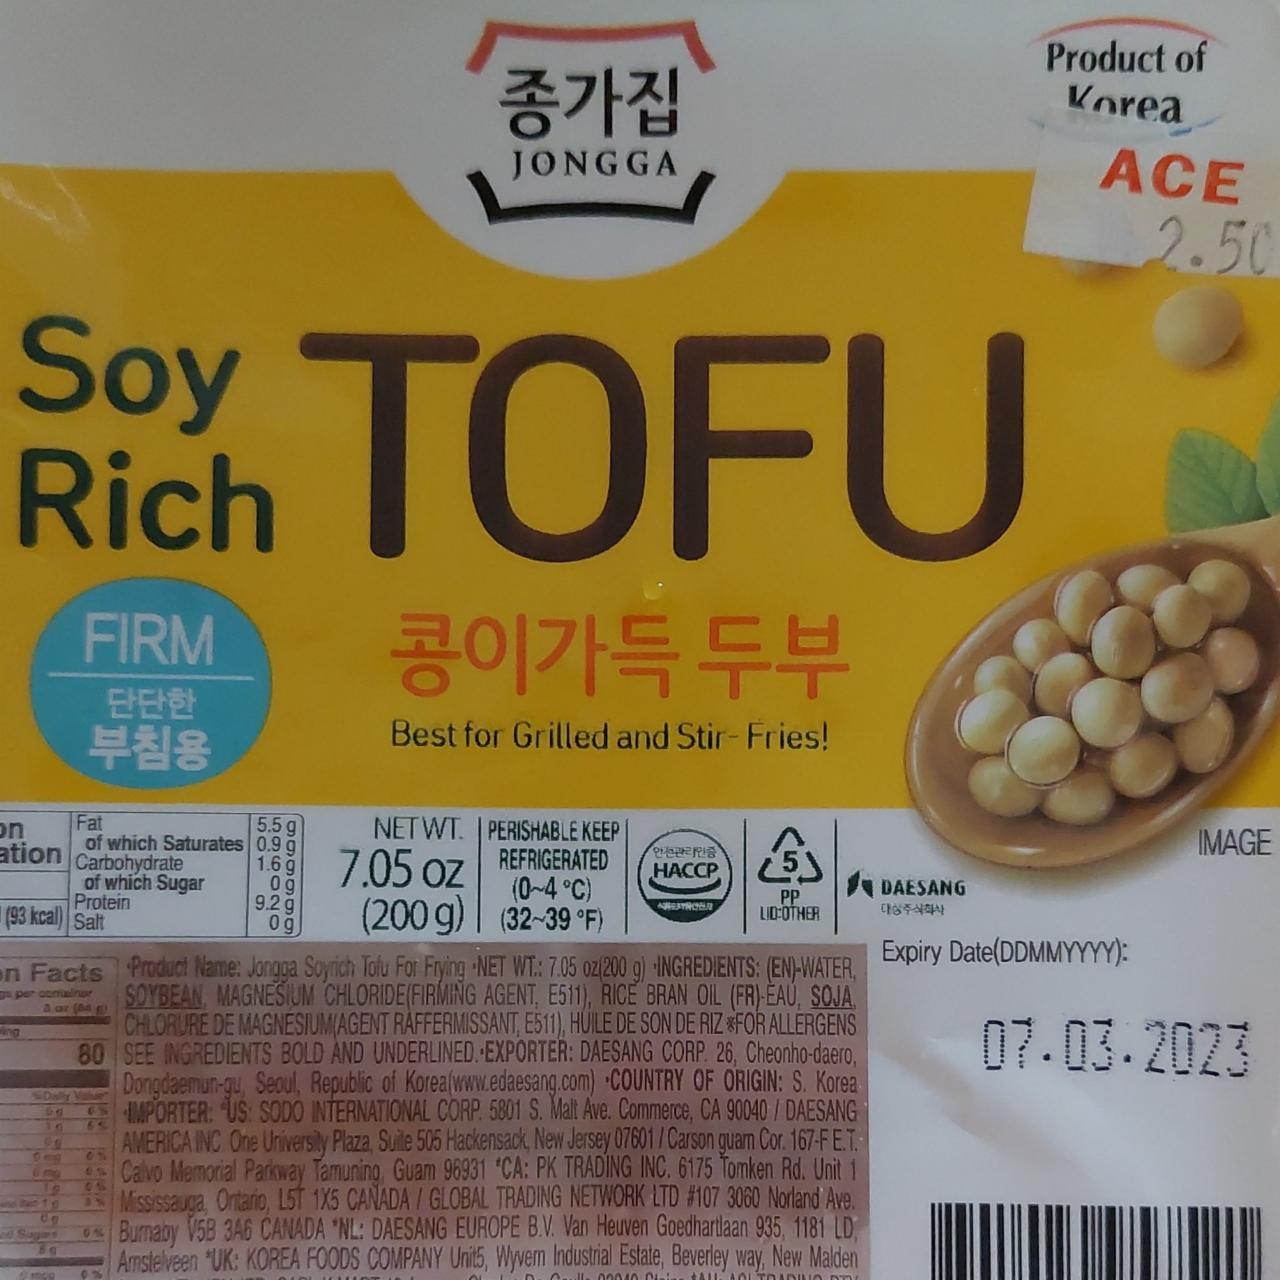 Fotografie - Soy rich tofu firm